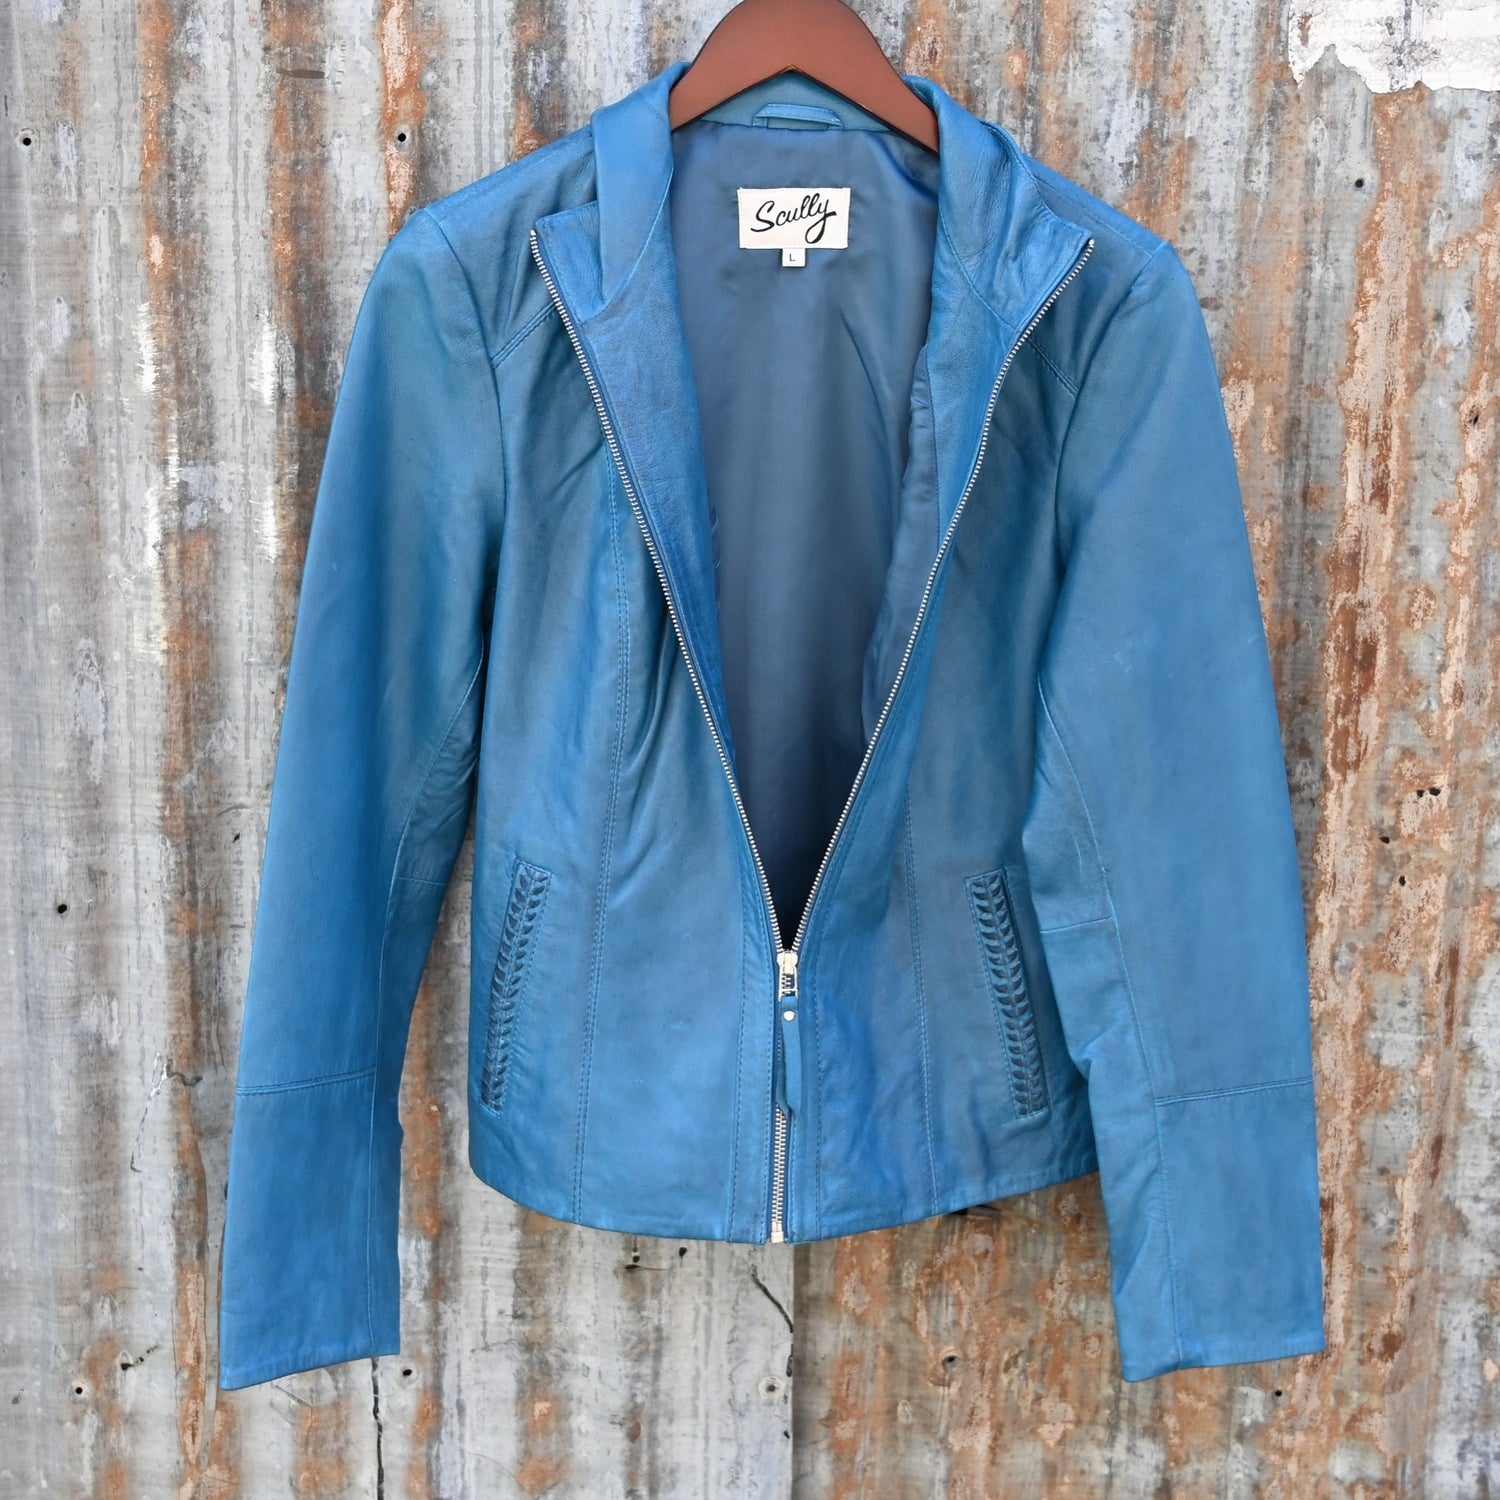 Ladies Lightweight Leather Jacket with Zip Front in Denim